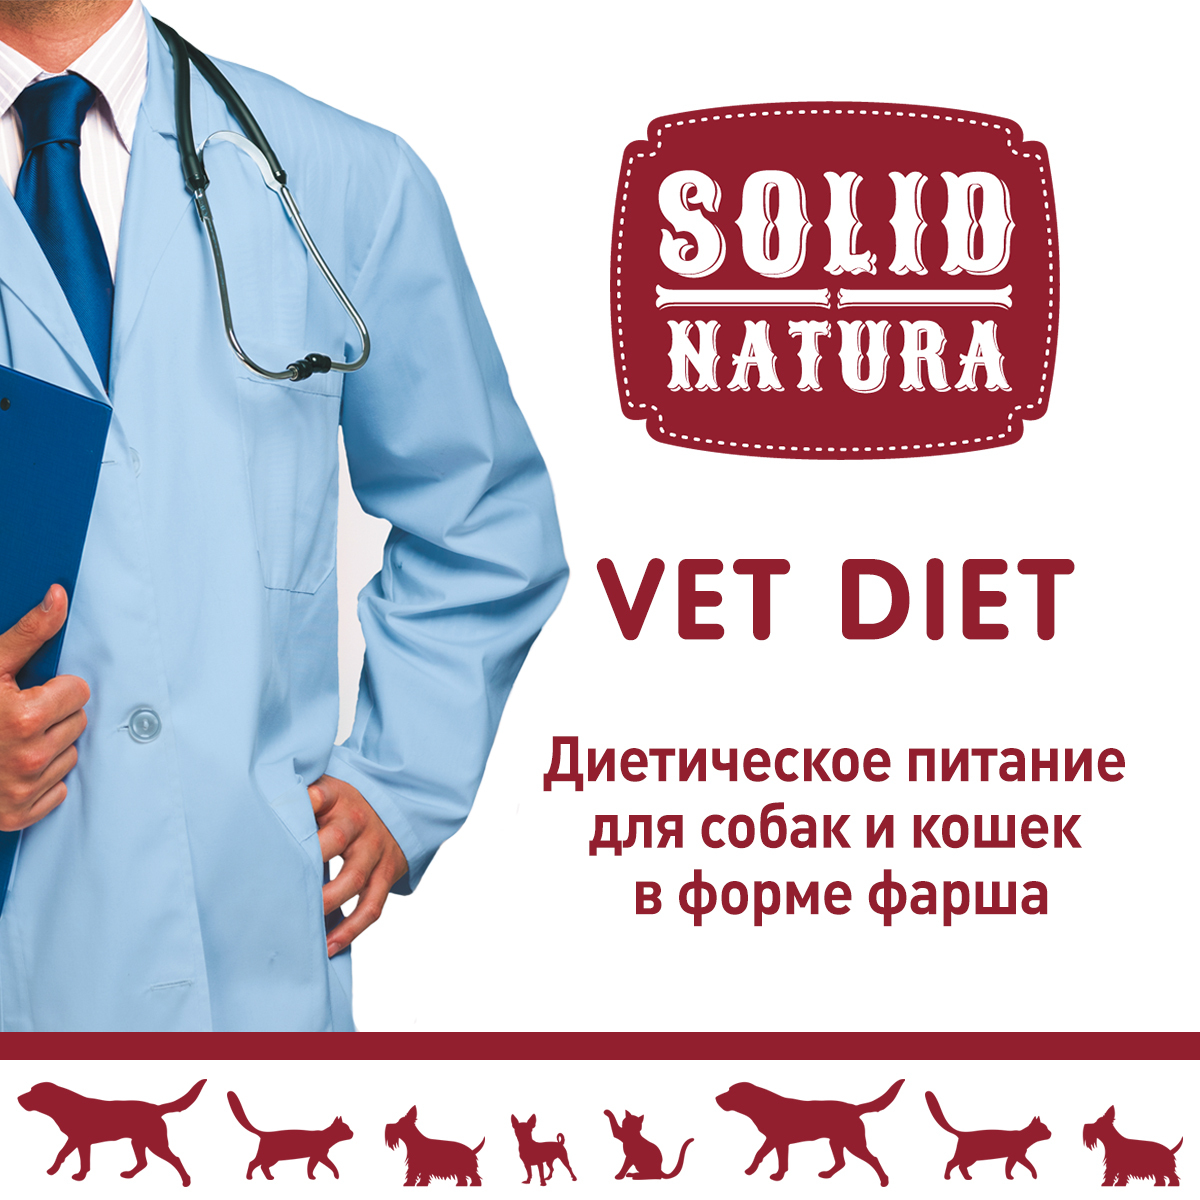 Natura vet. Hepatic Солид натура. Влажный корм Solid Natura vet Recovery support диета для кошек и собак. Solid Natura vet renal. Солид натура рекавери.